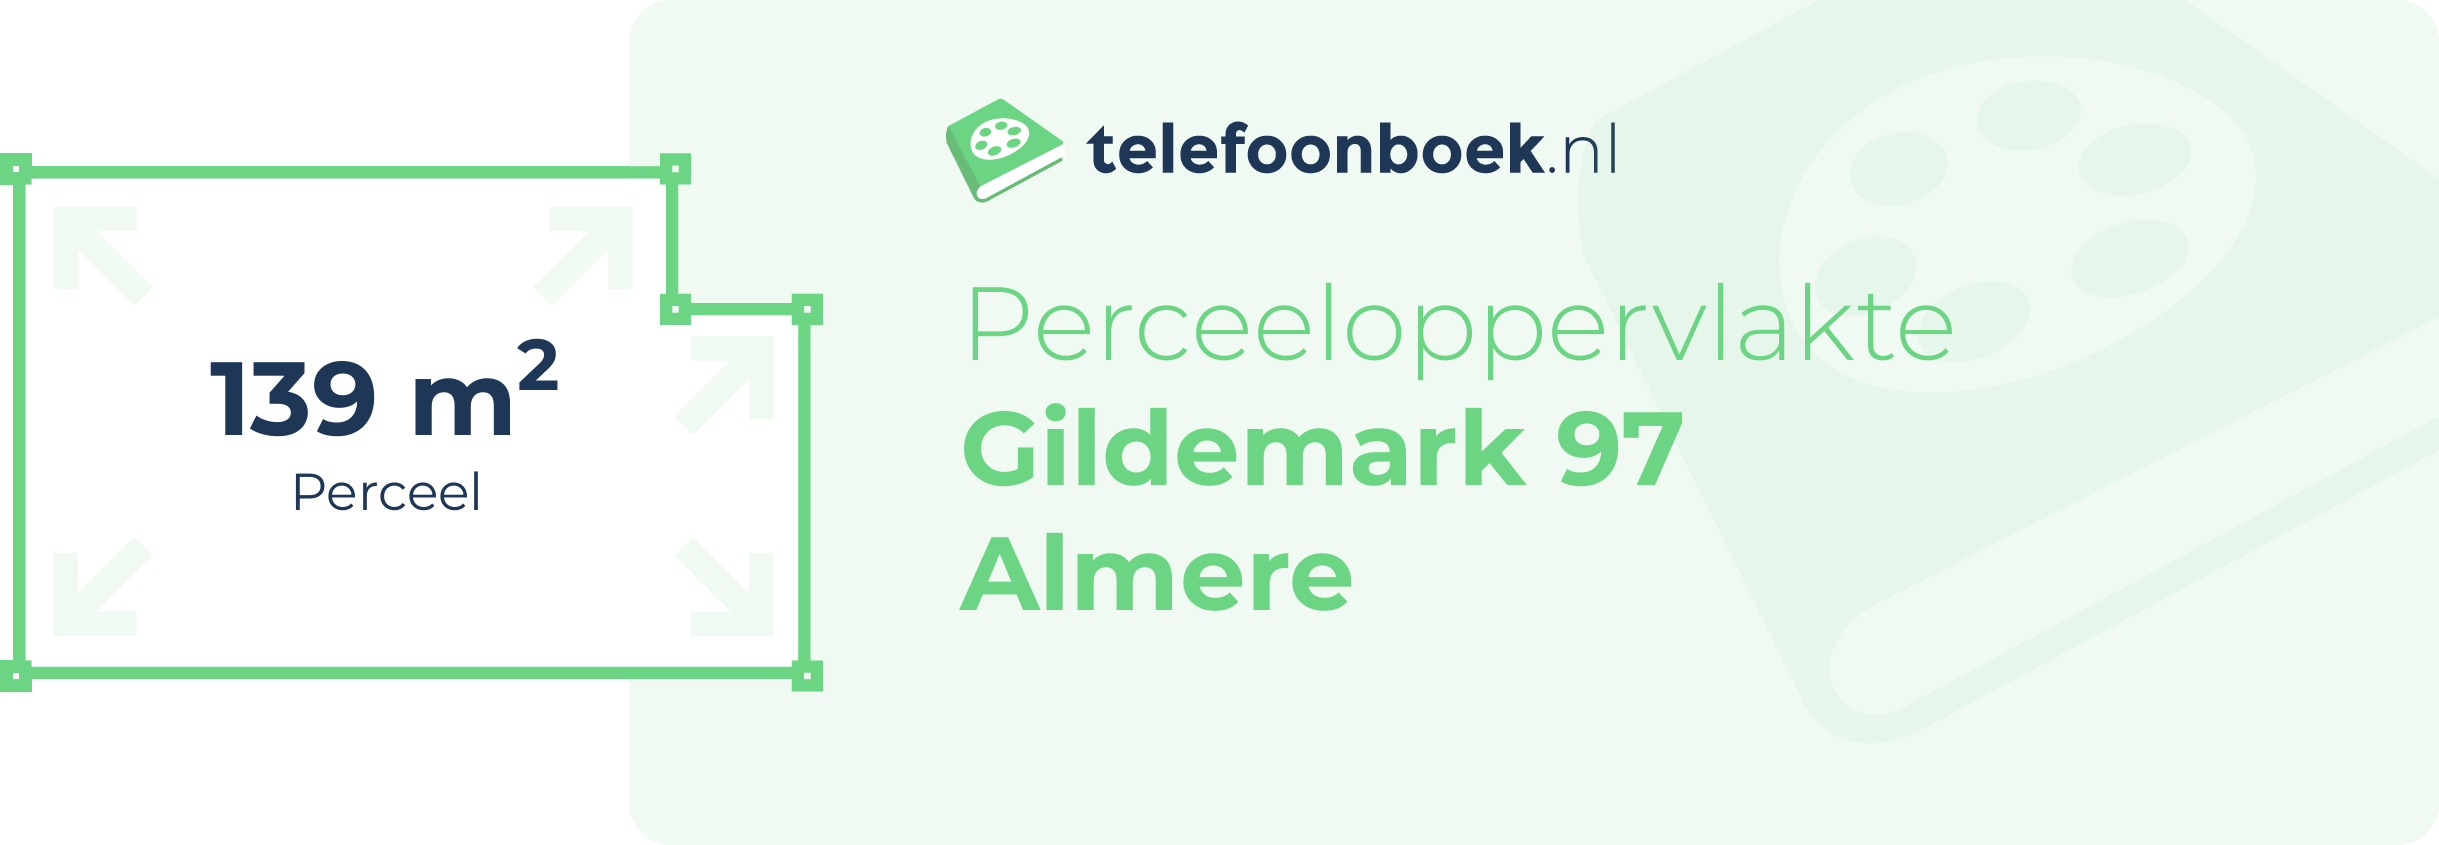 Perceeloppervlakte Gildemark 97 Almere